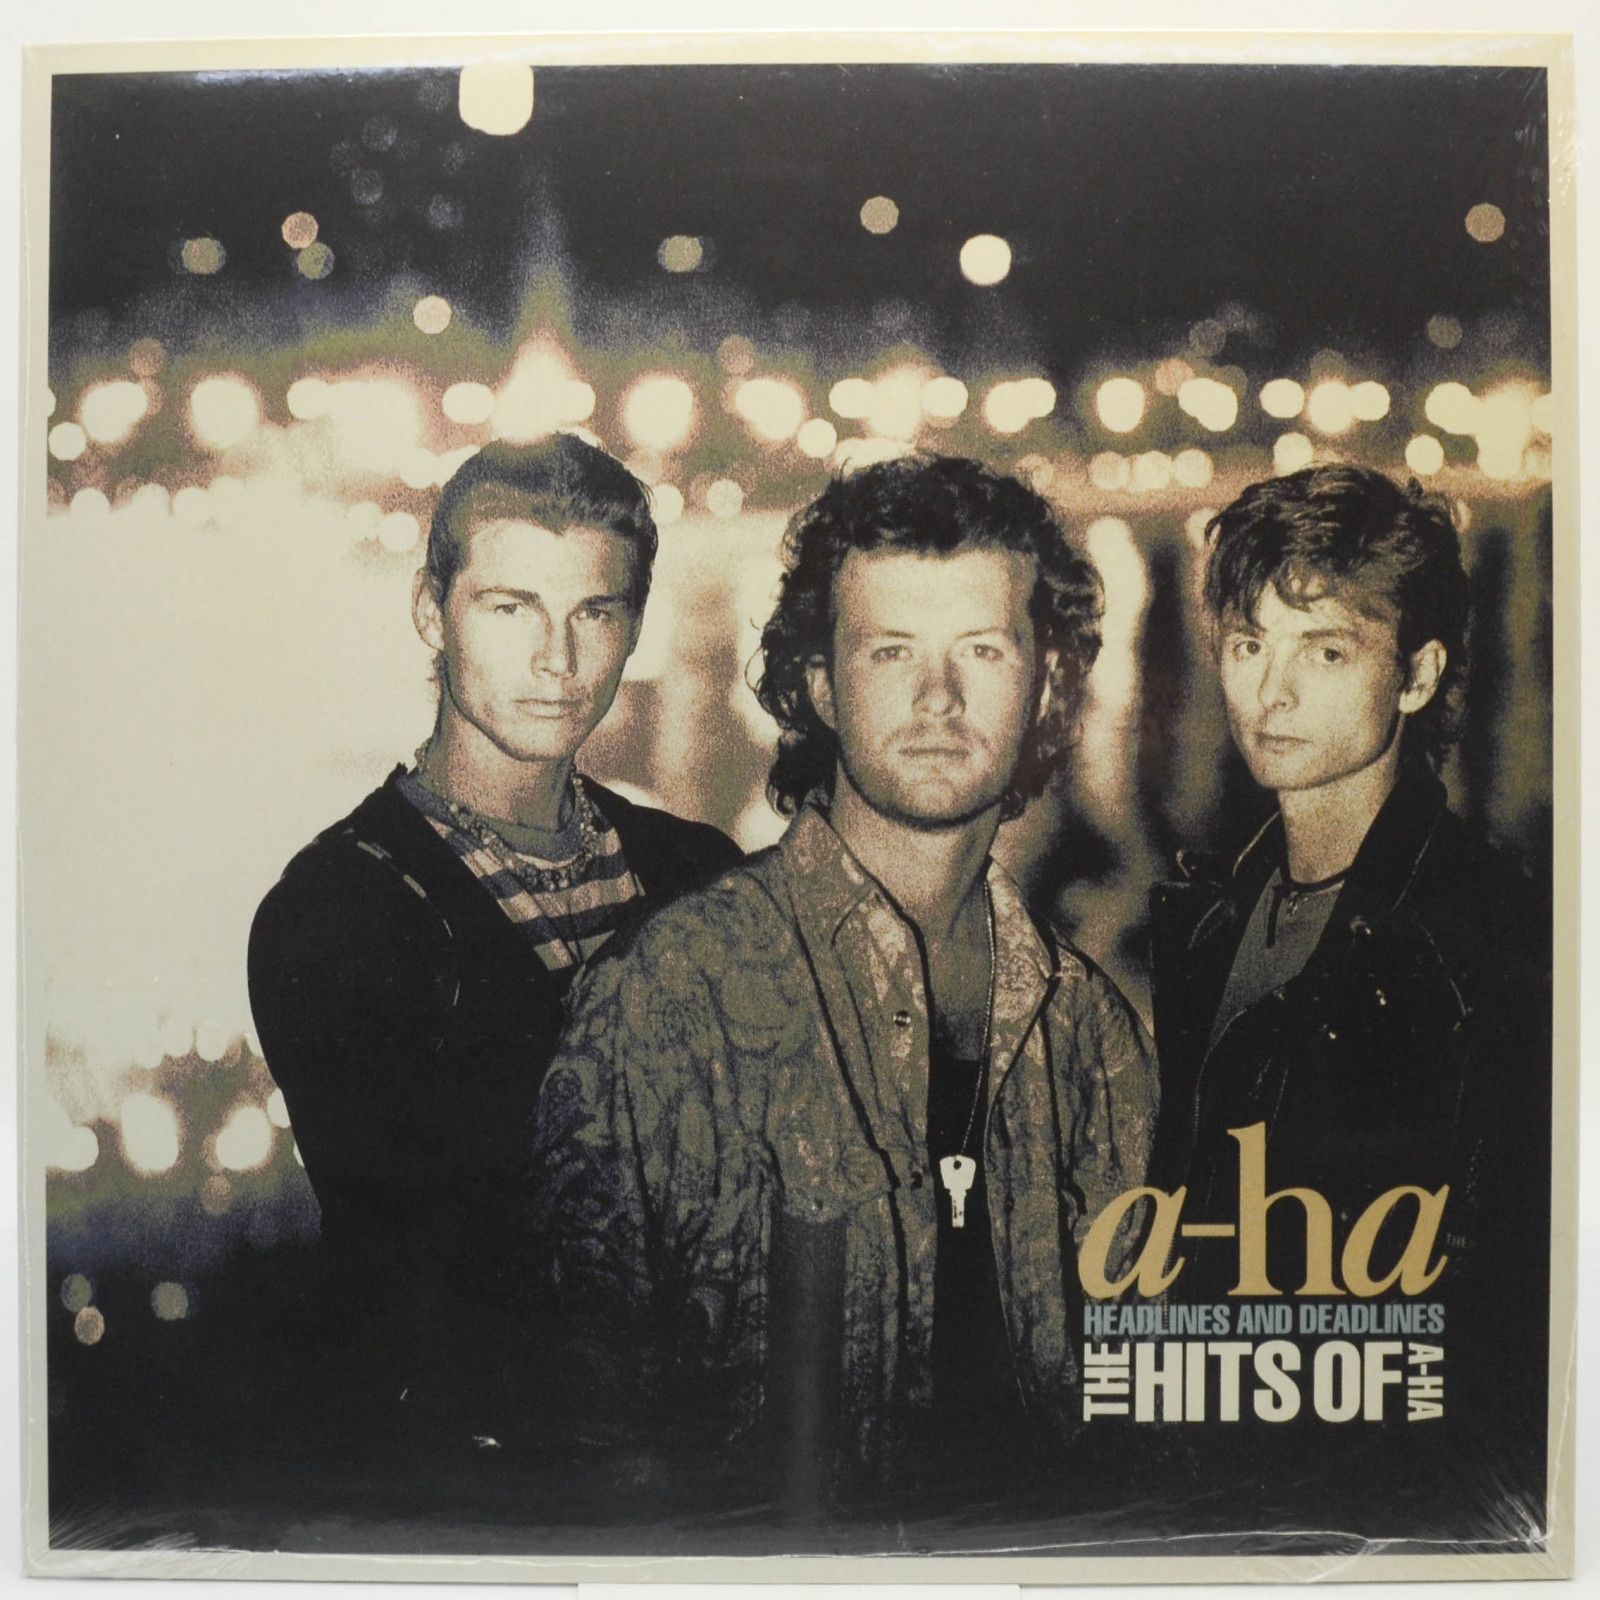 a-ha — Headlines And Deadlines - The Hits Of A-Ha, 1991